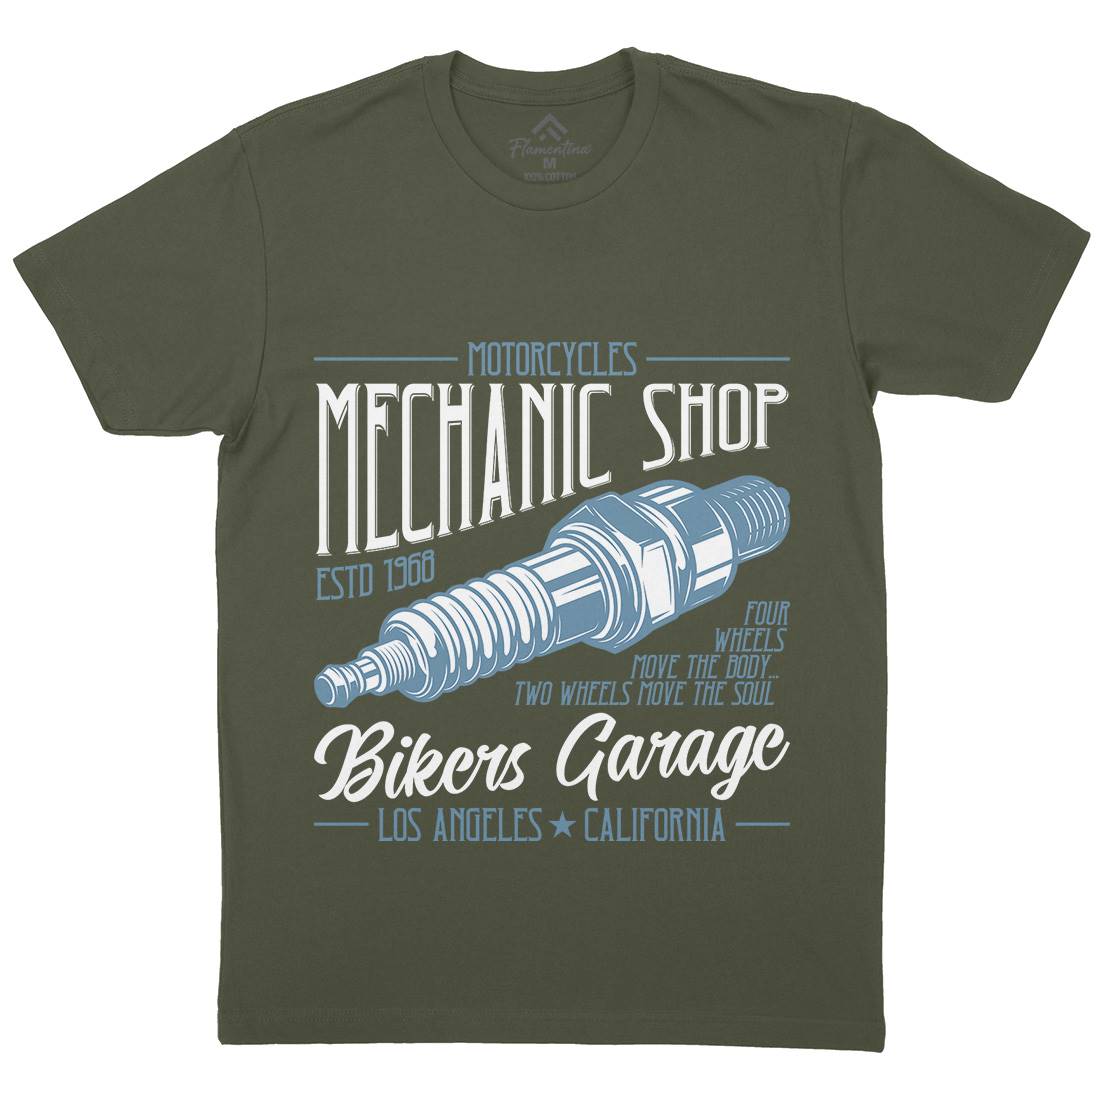 Mechanic Shop Mens Crew Neck T-Shirt Motorcycles B836